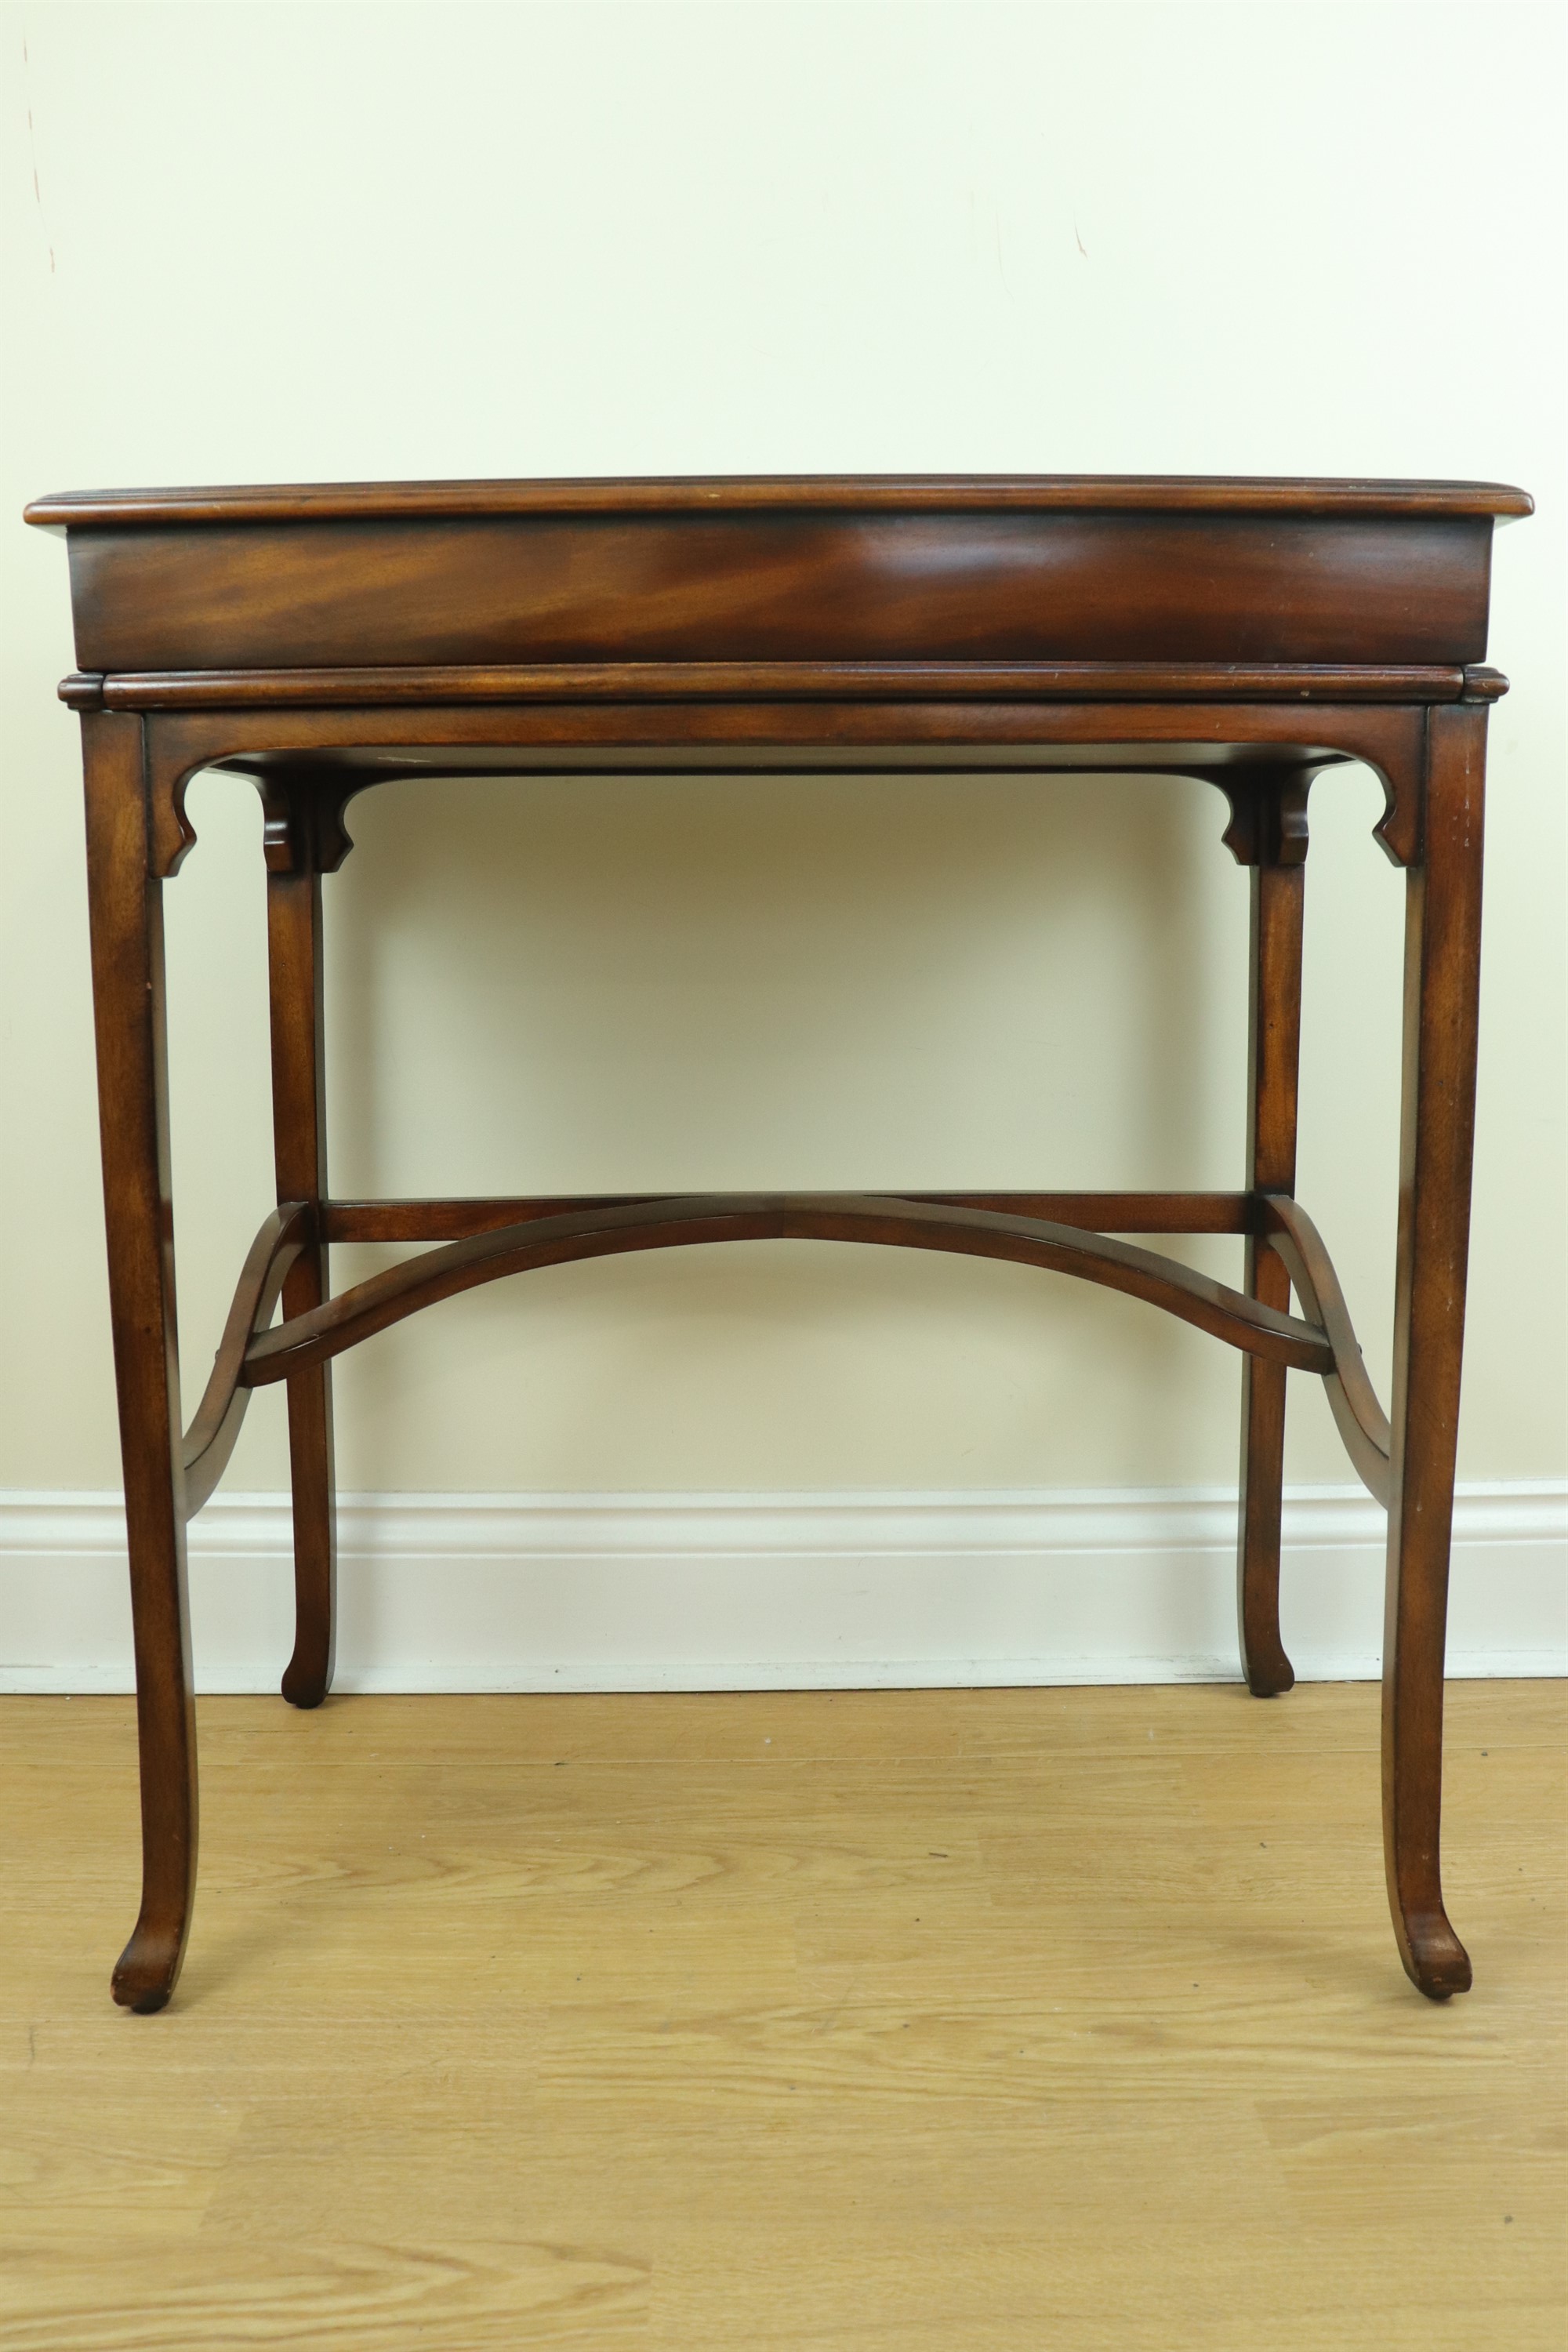 A Theodore Alexander Kaye mahogany campaign style desk, 74 cm x 44 cm x 79 cm